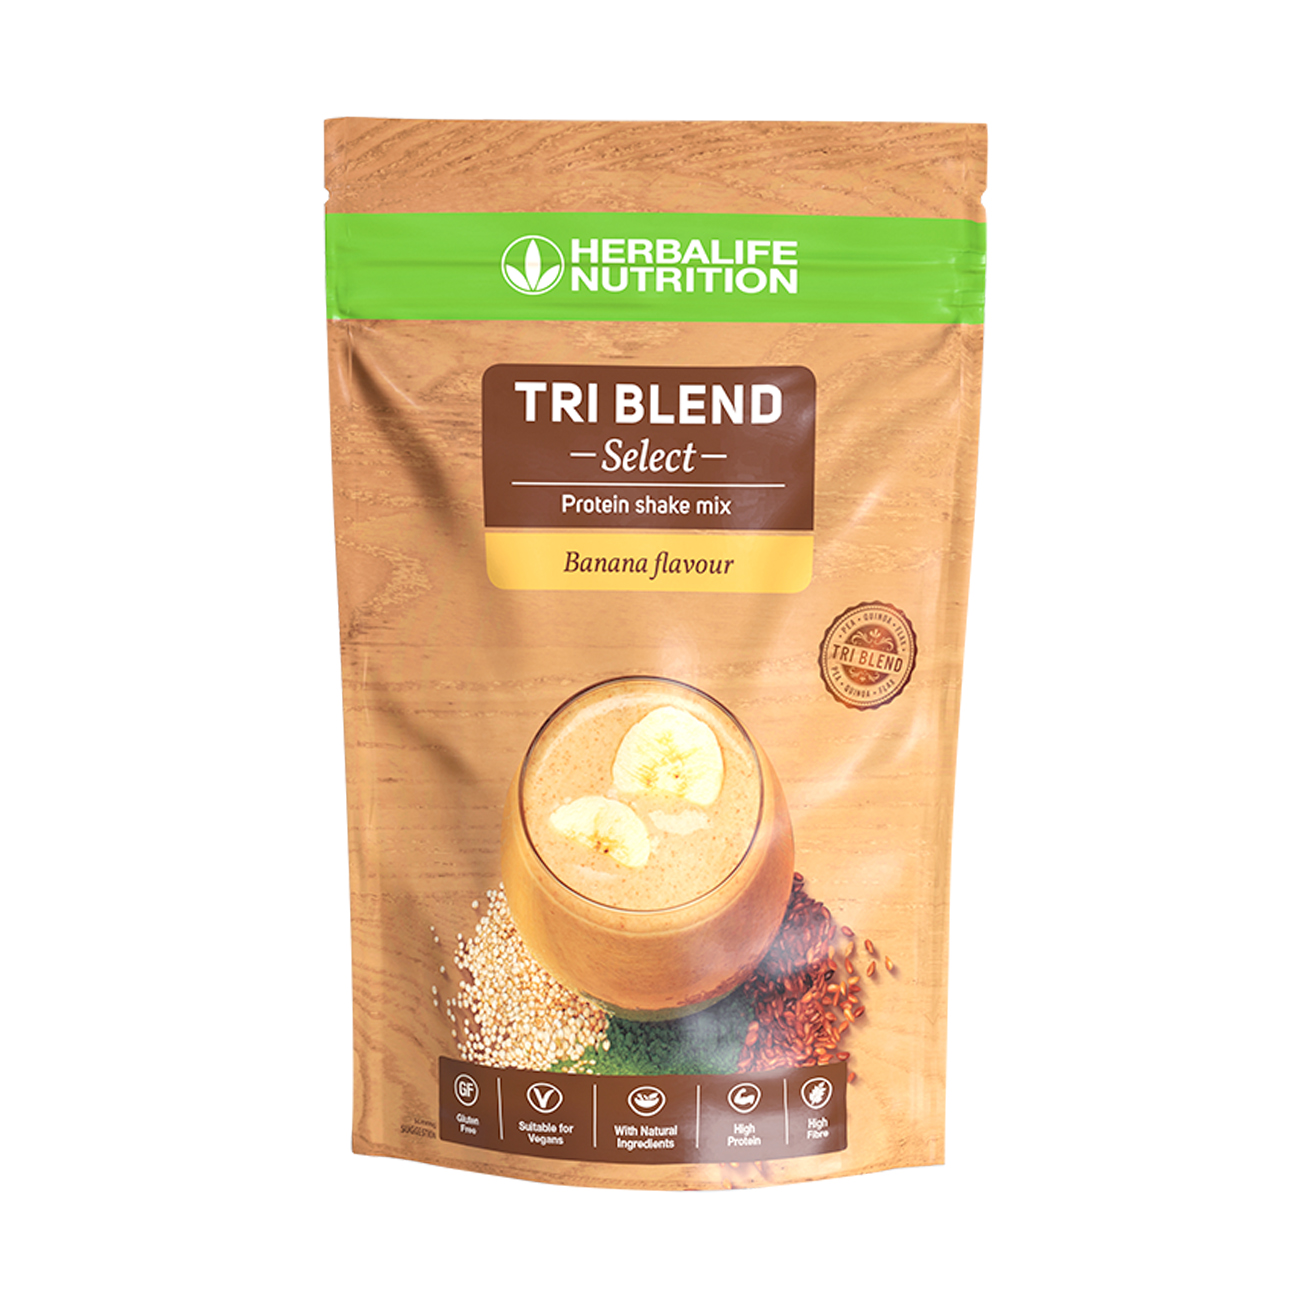 Tri Blend Select Shake mix proteic vegan Banană product shot